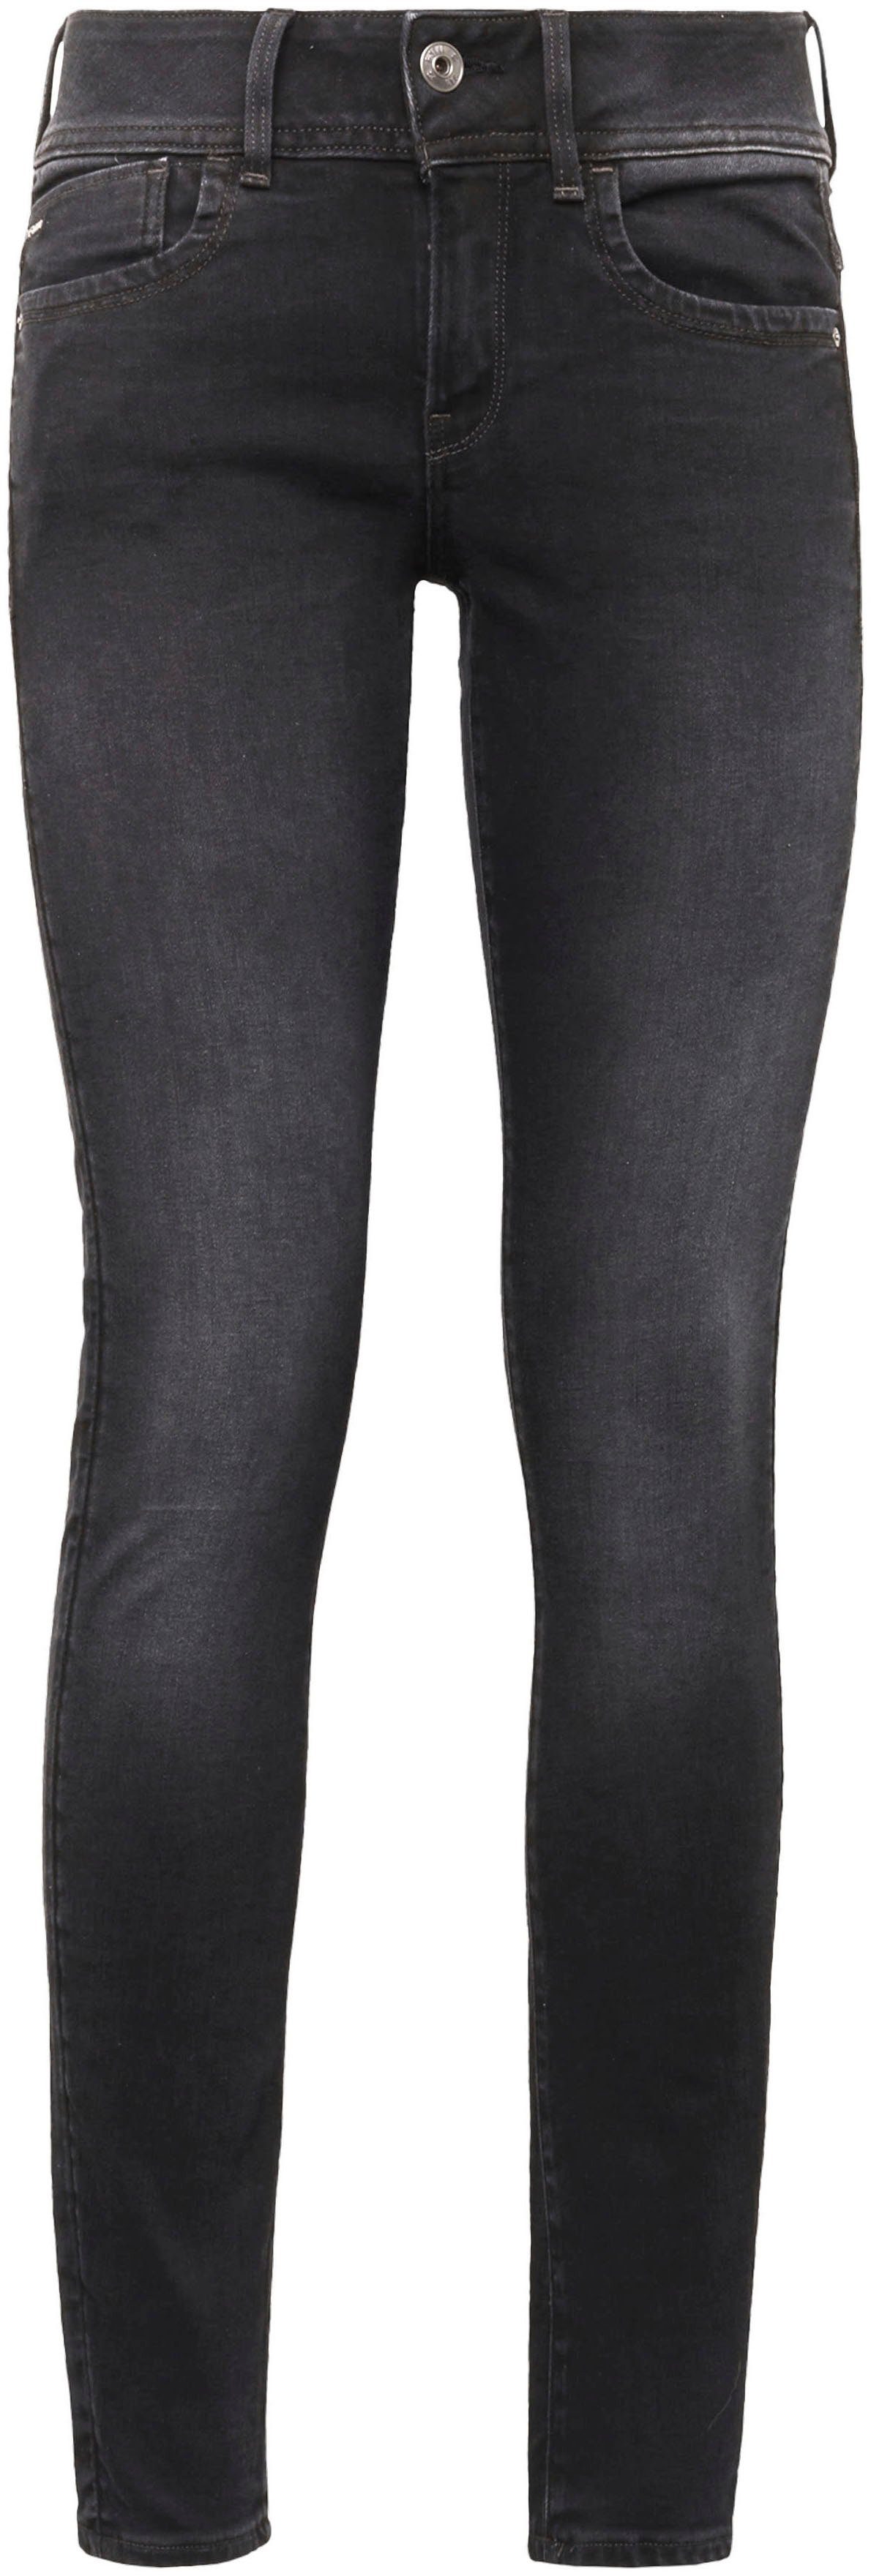 G-Star RAW Skinny-fit-Jeans Mid Waist black dusty Elto grey, nero superstretch Elasthan-Anteil mit Skinny